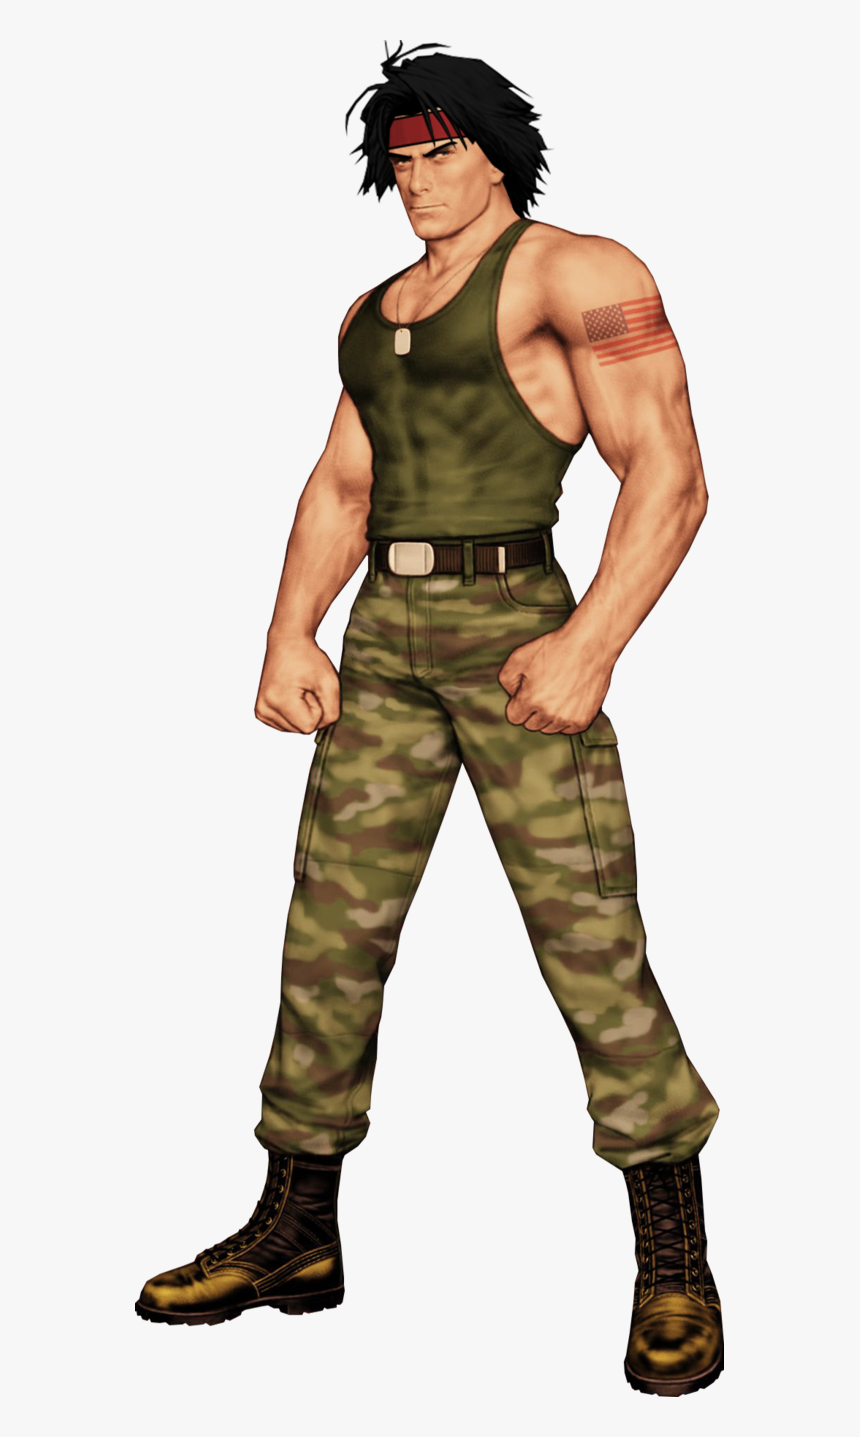 John Rambo Png - Capcom Vs Snk Shinkiro, Transparent Png, Free Download